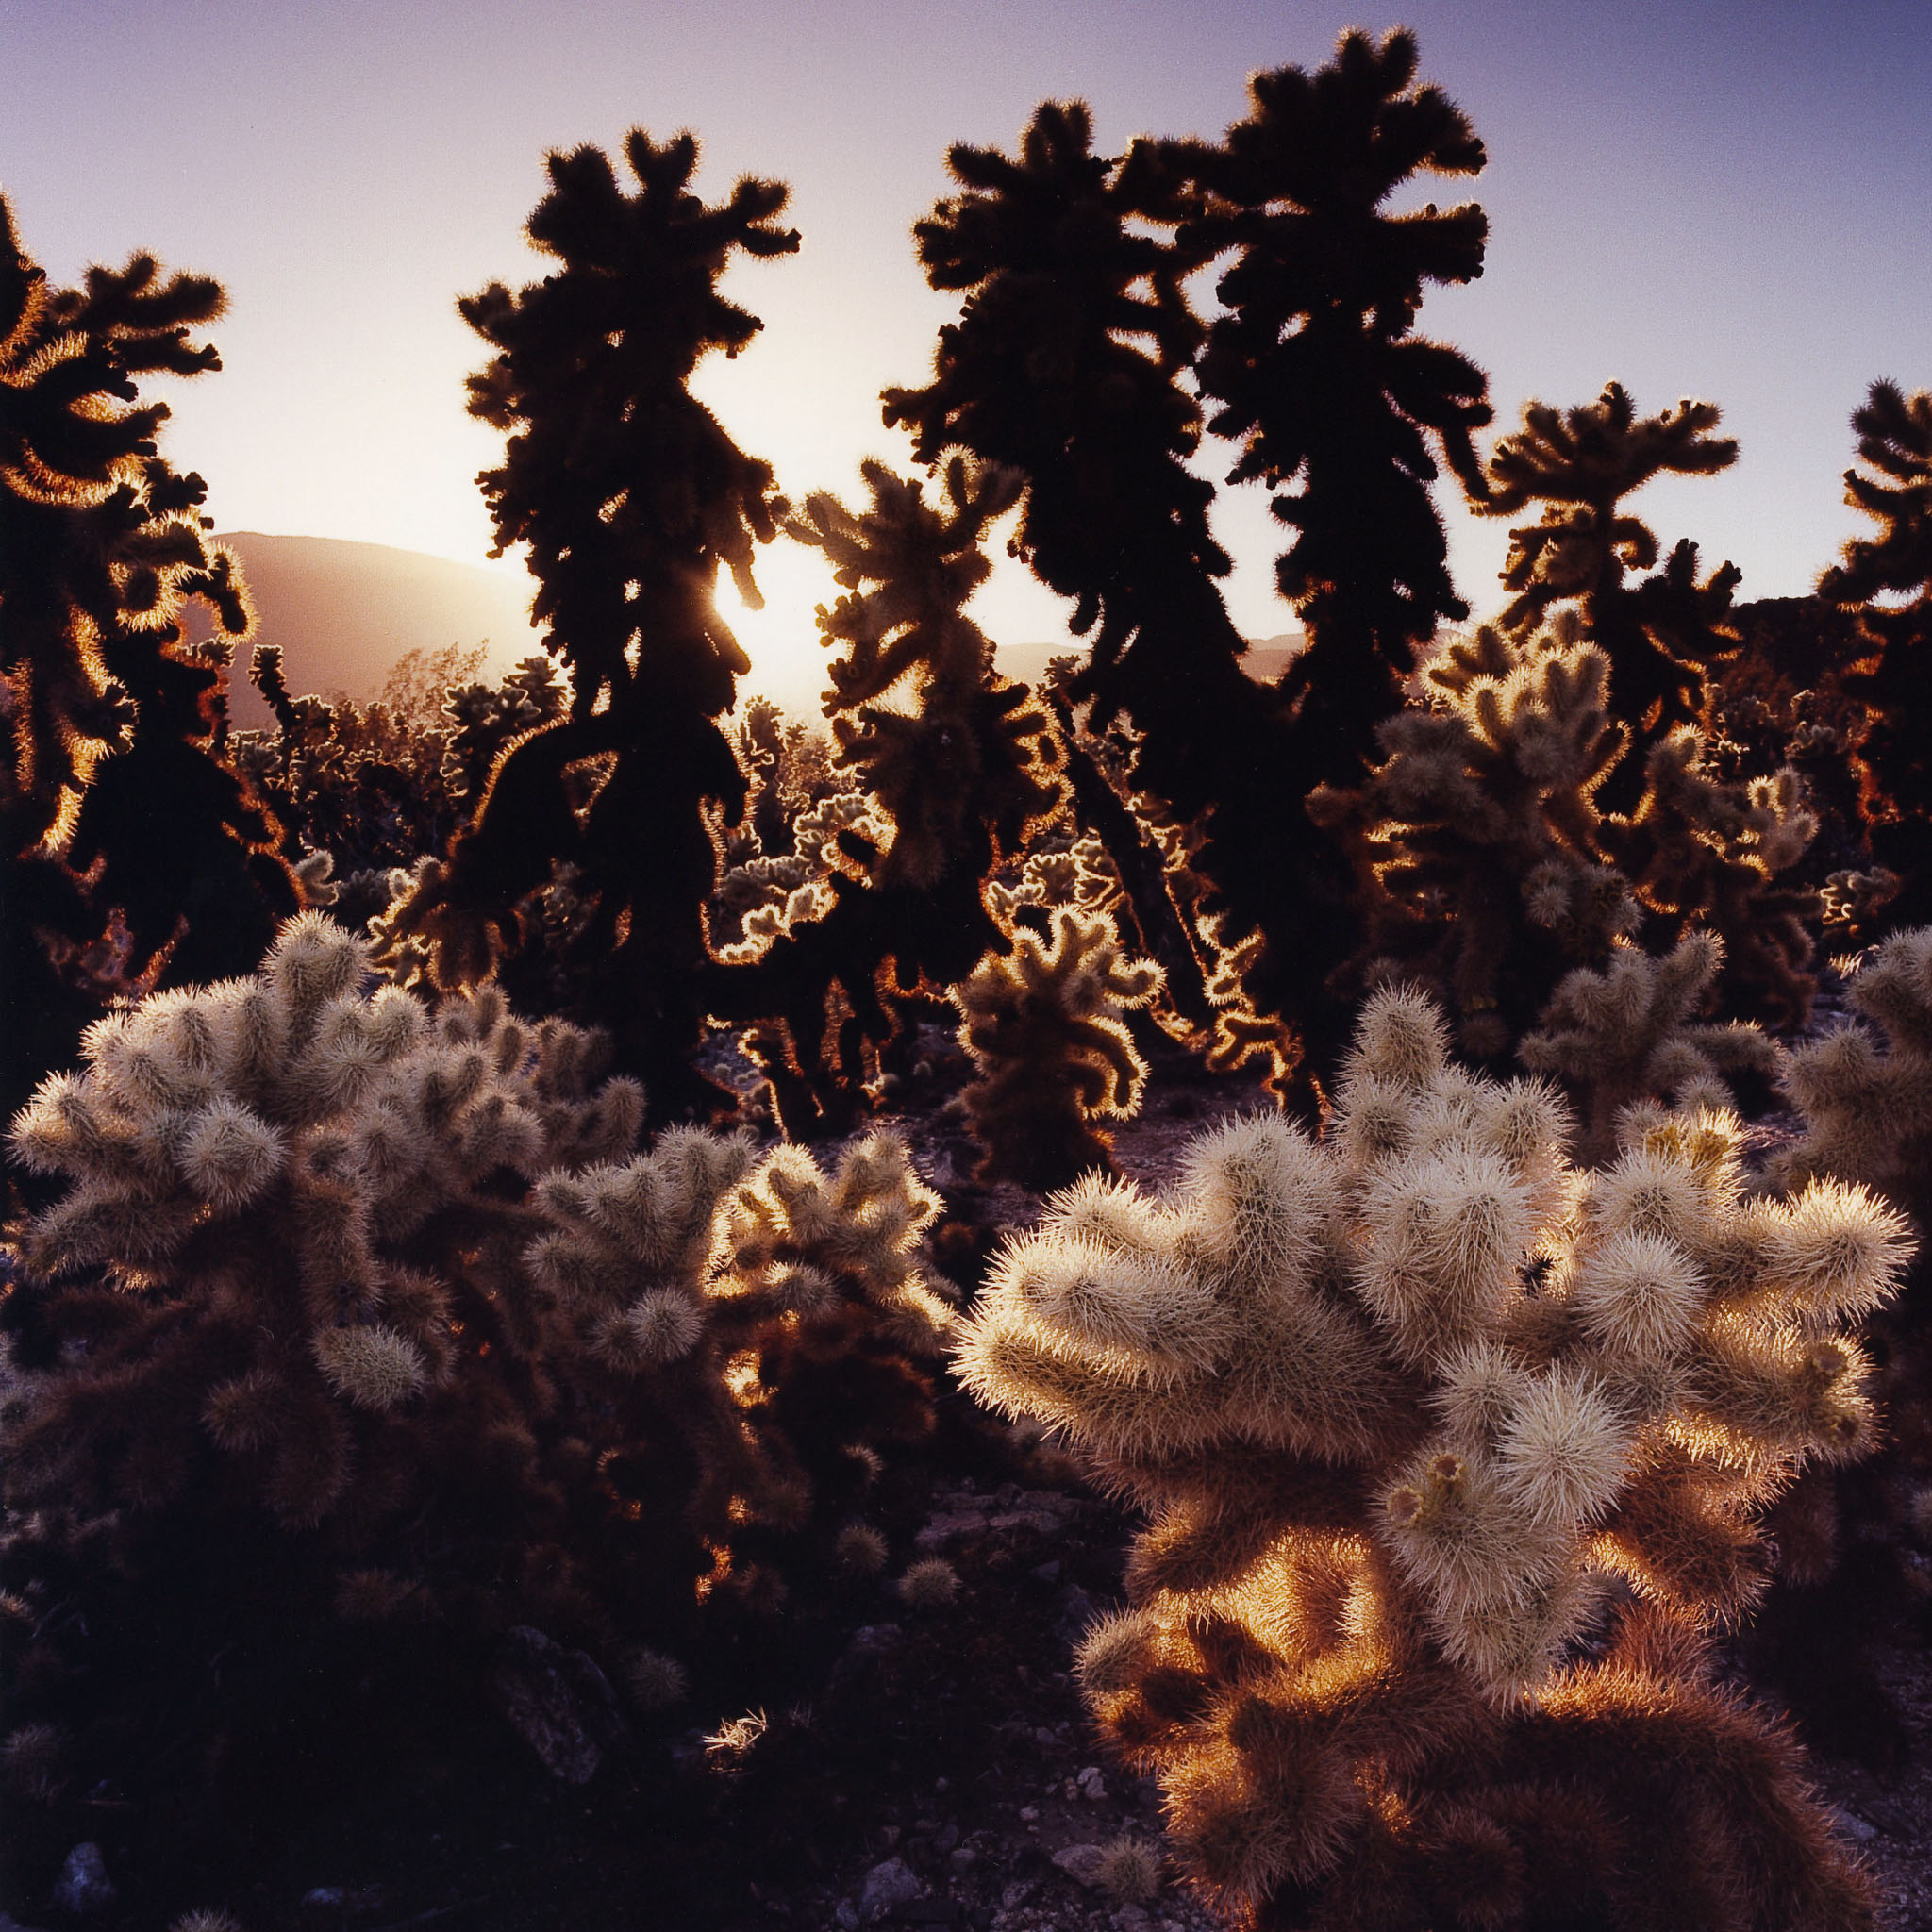 jumping-cholla-cactus-sunset-joshua-tree-national-forest-ca-8x8.jpg